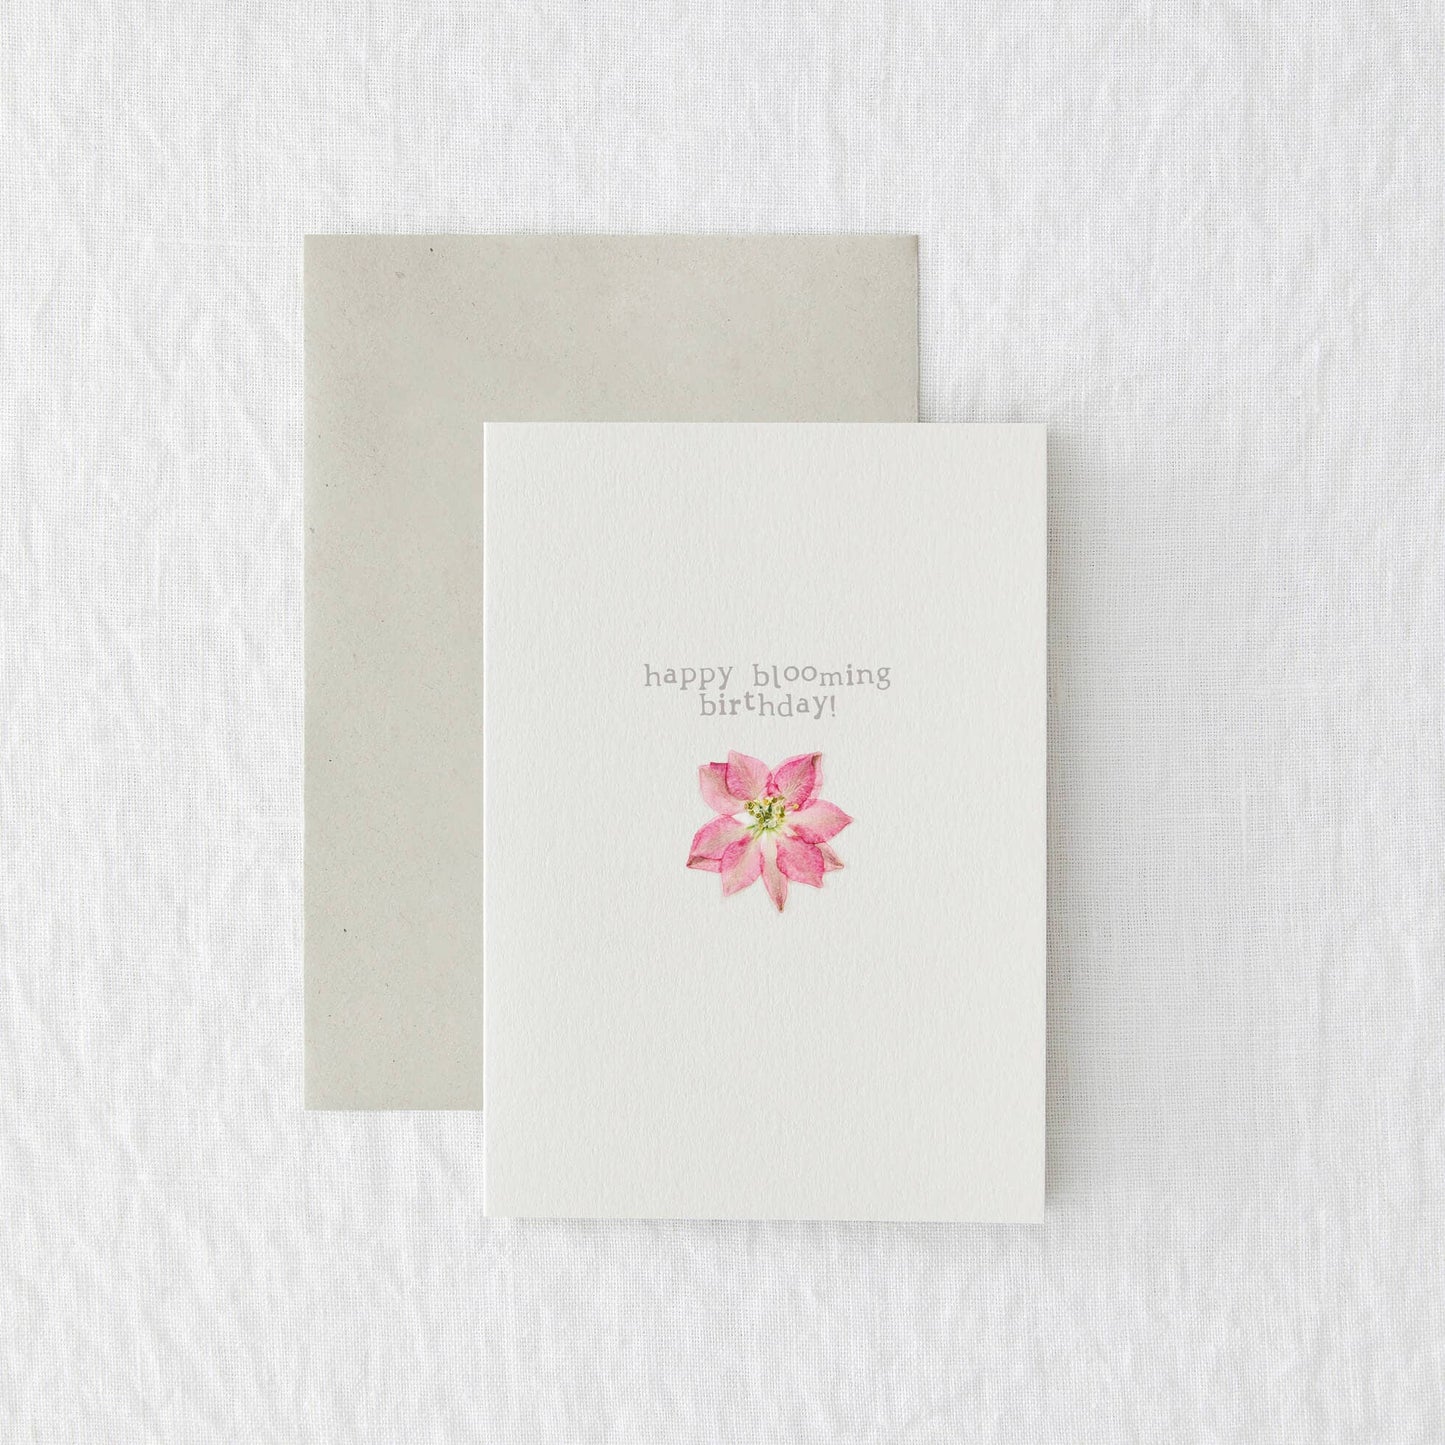 Blooming Birthday - Real pressed flower card